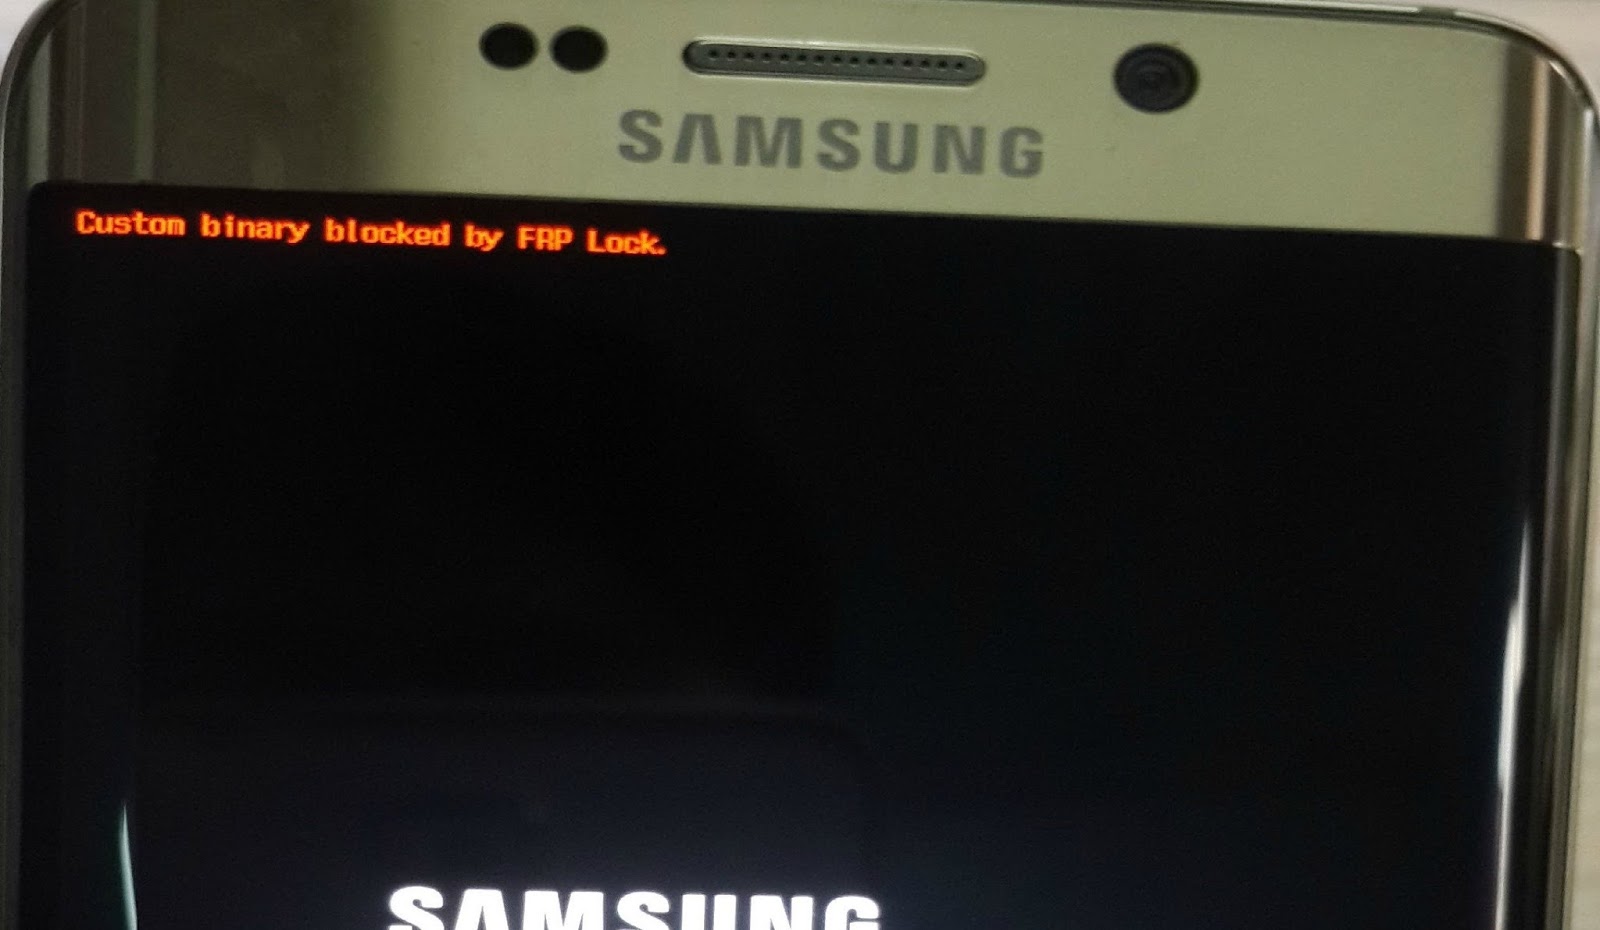 Снятие frp блокировки. FRP Lock Samsung. Custom binary blocked by FRP Lock. Custom binary blocked by FRP Lock Samsung j6. Binary blocked by Fap Lock.